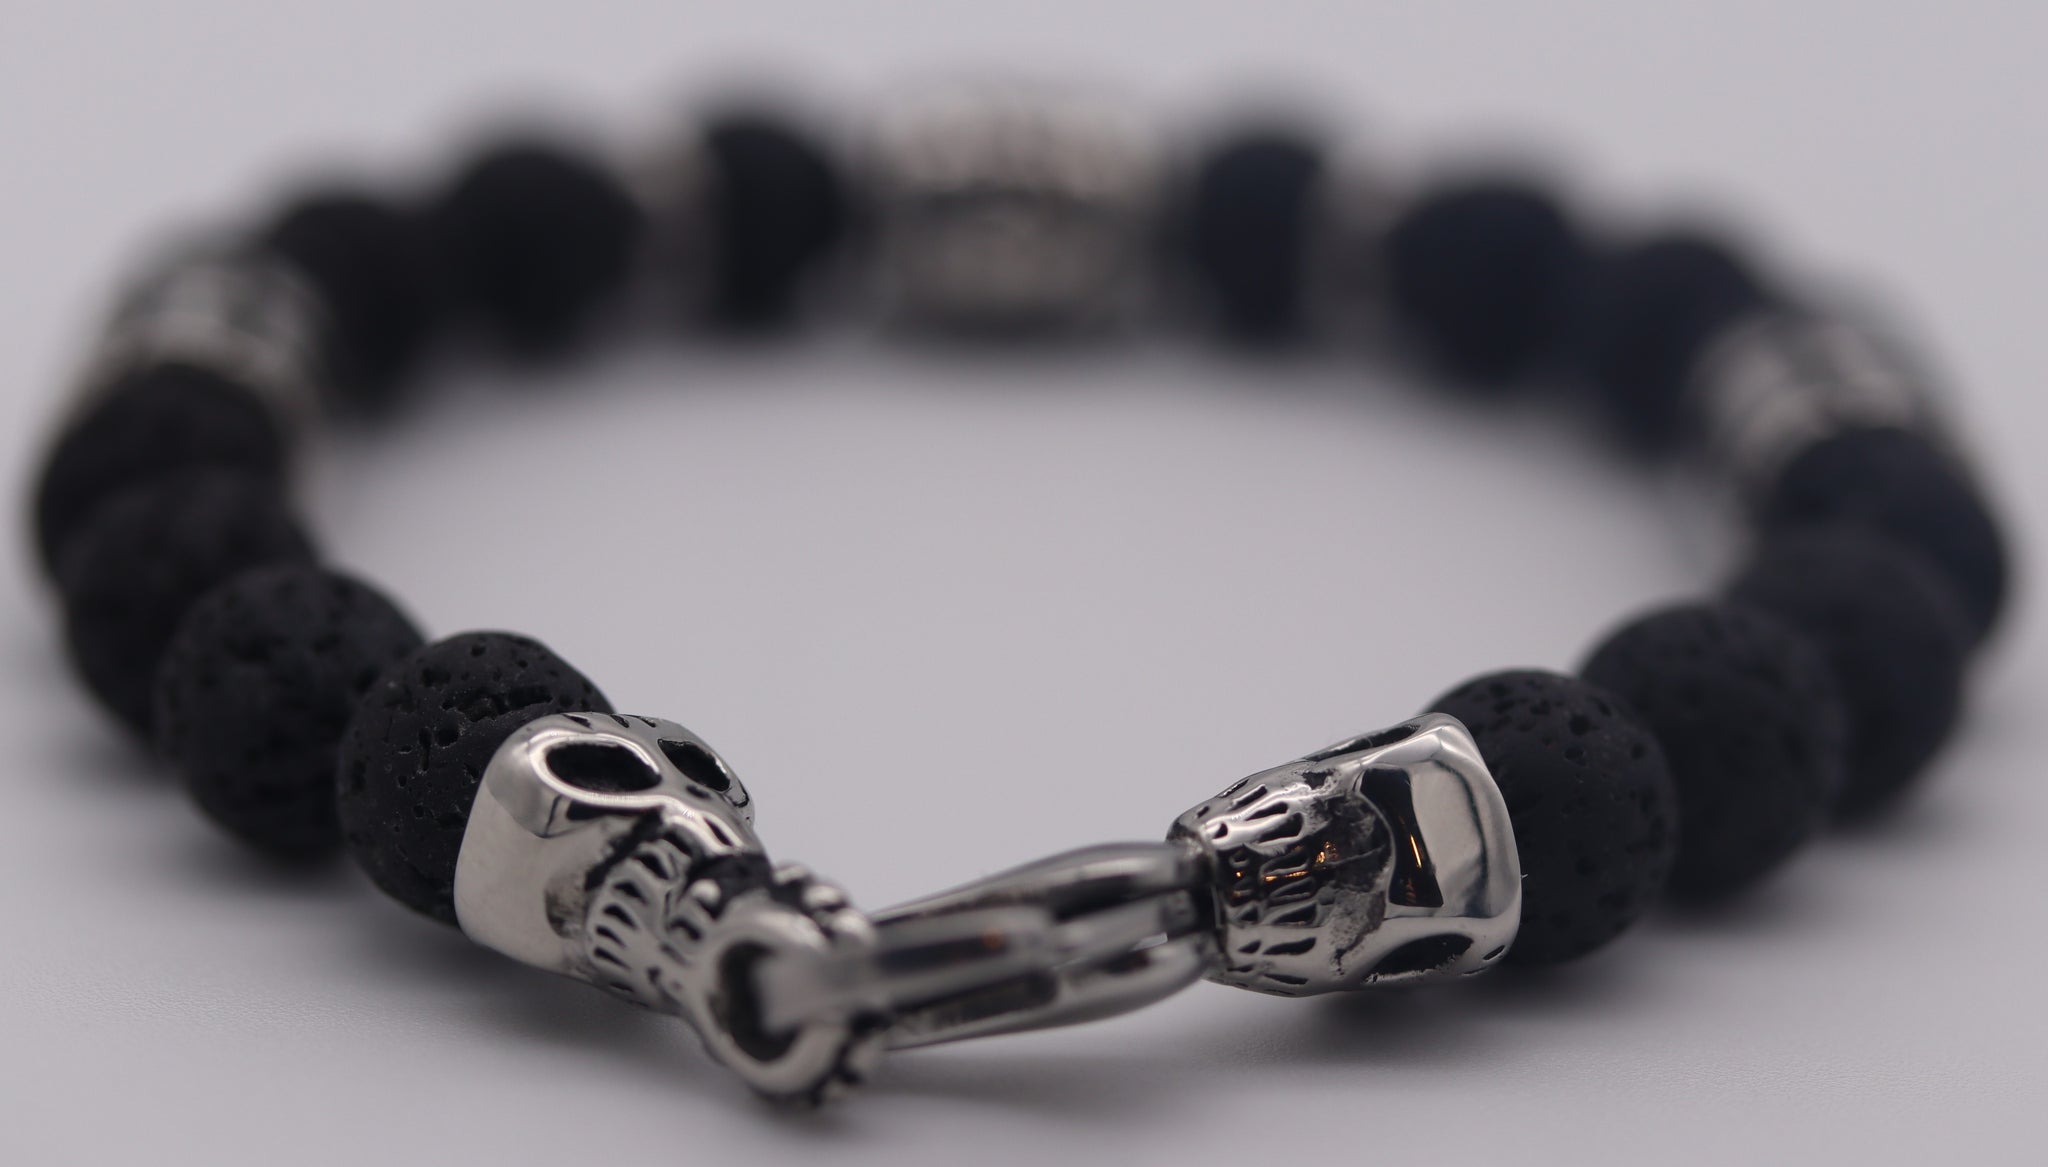 Stainless Steel Bracelet with Black Druzy Beads